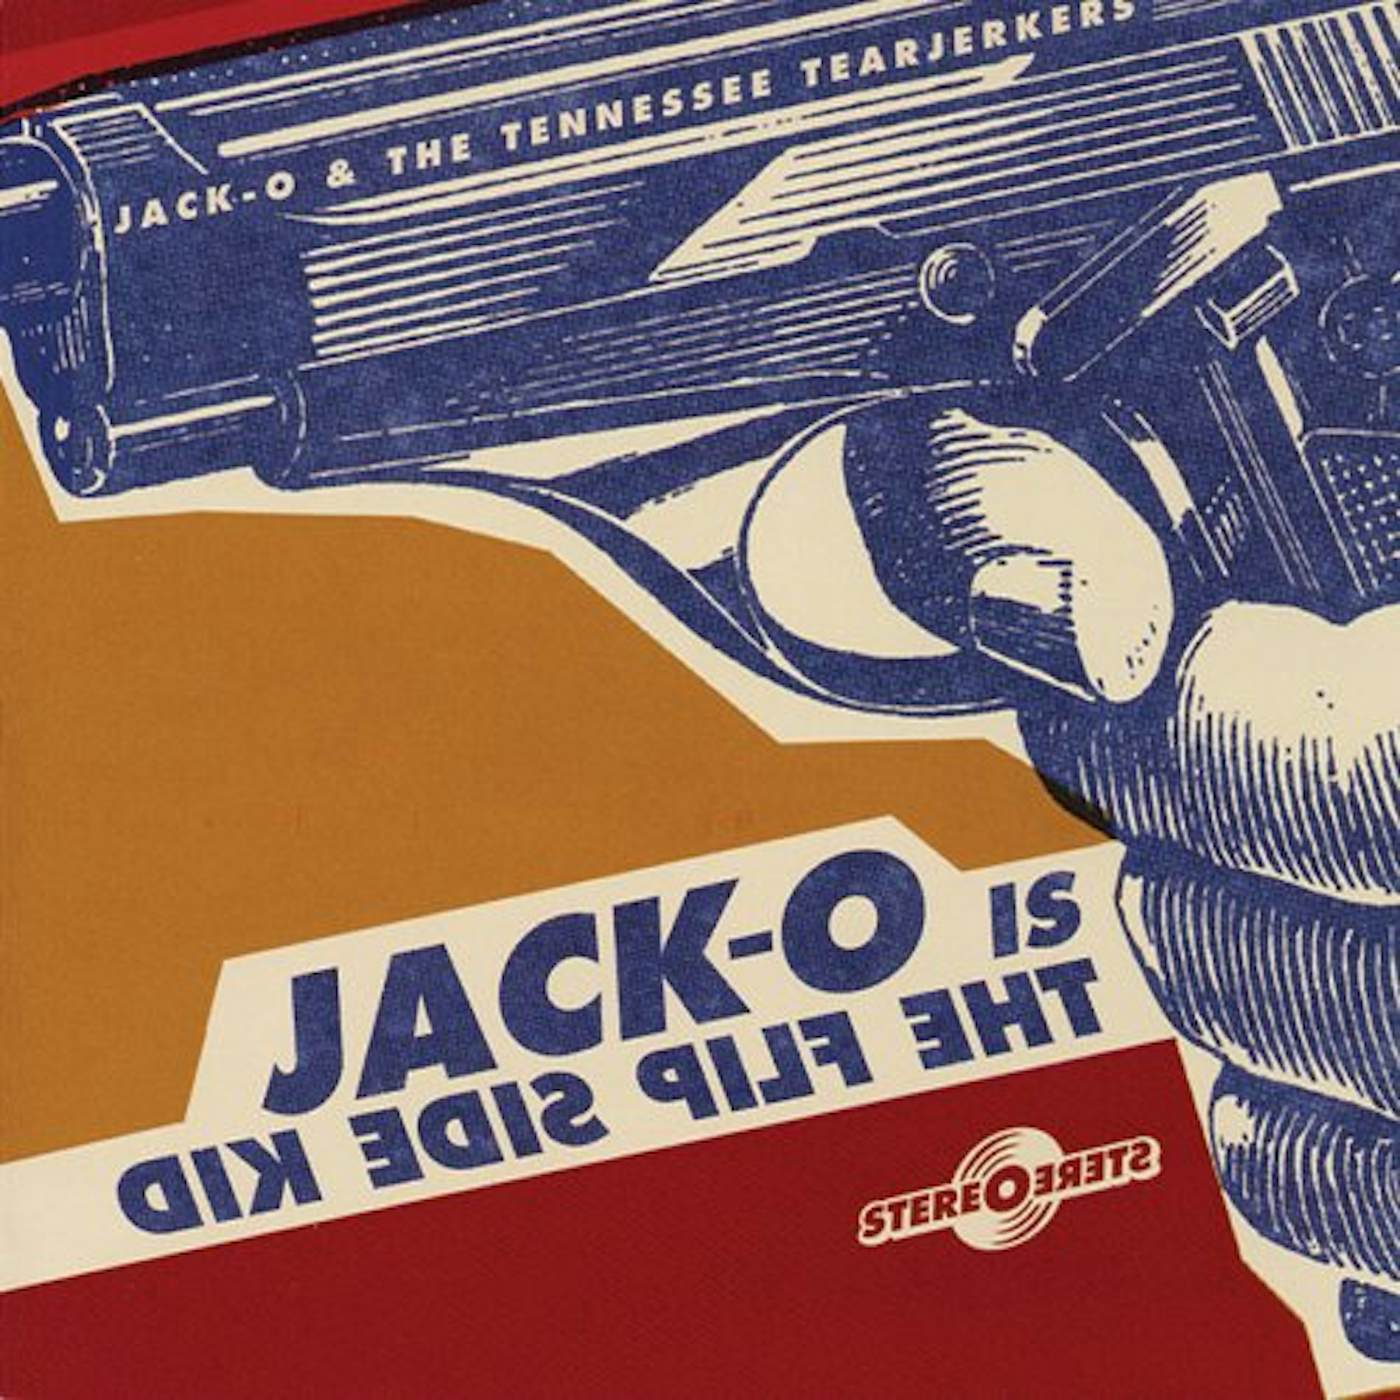 Jack Oblivian Jack-O Is The Flip Side Kid Vinyl Record